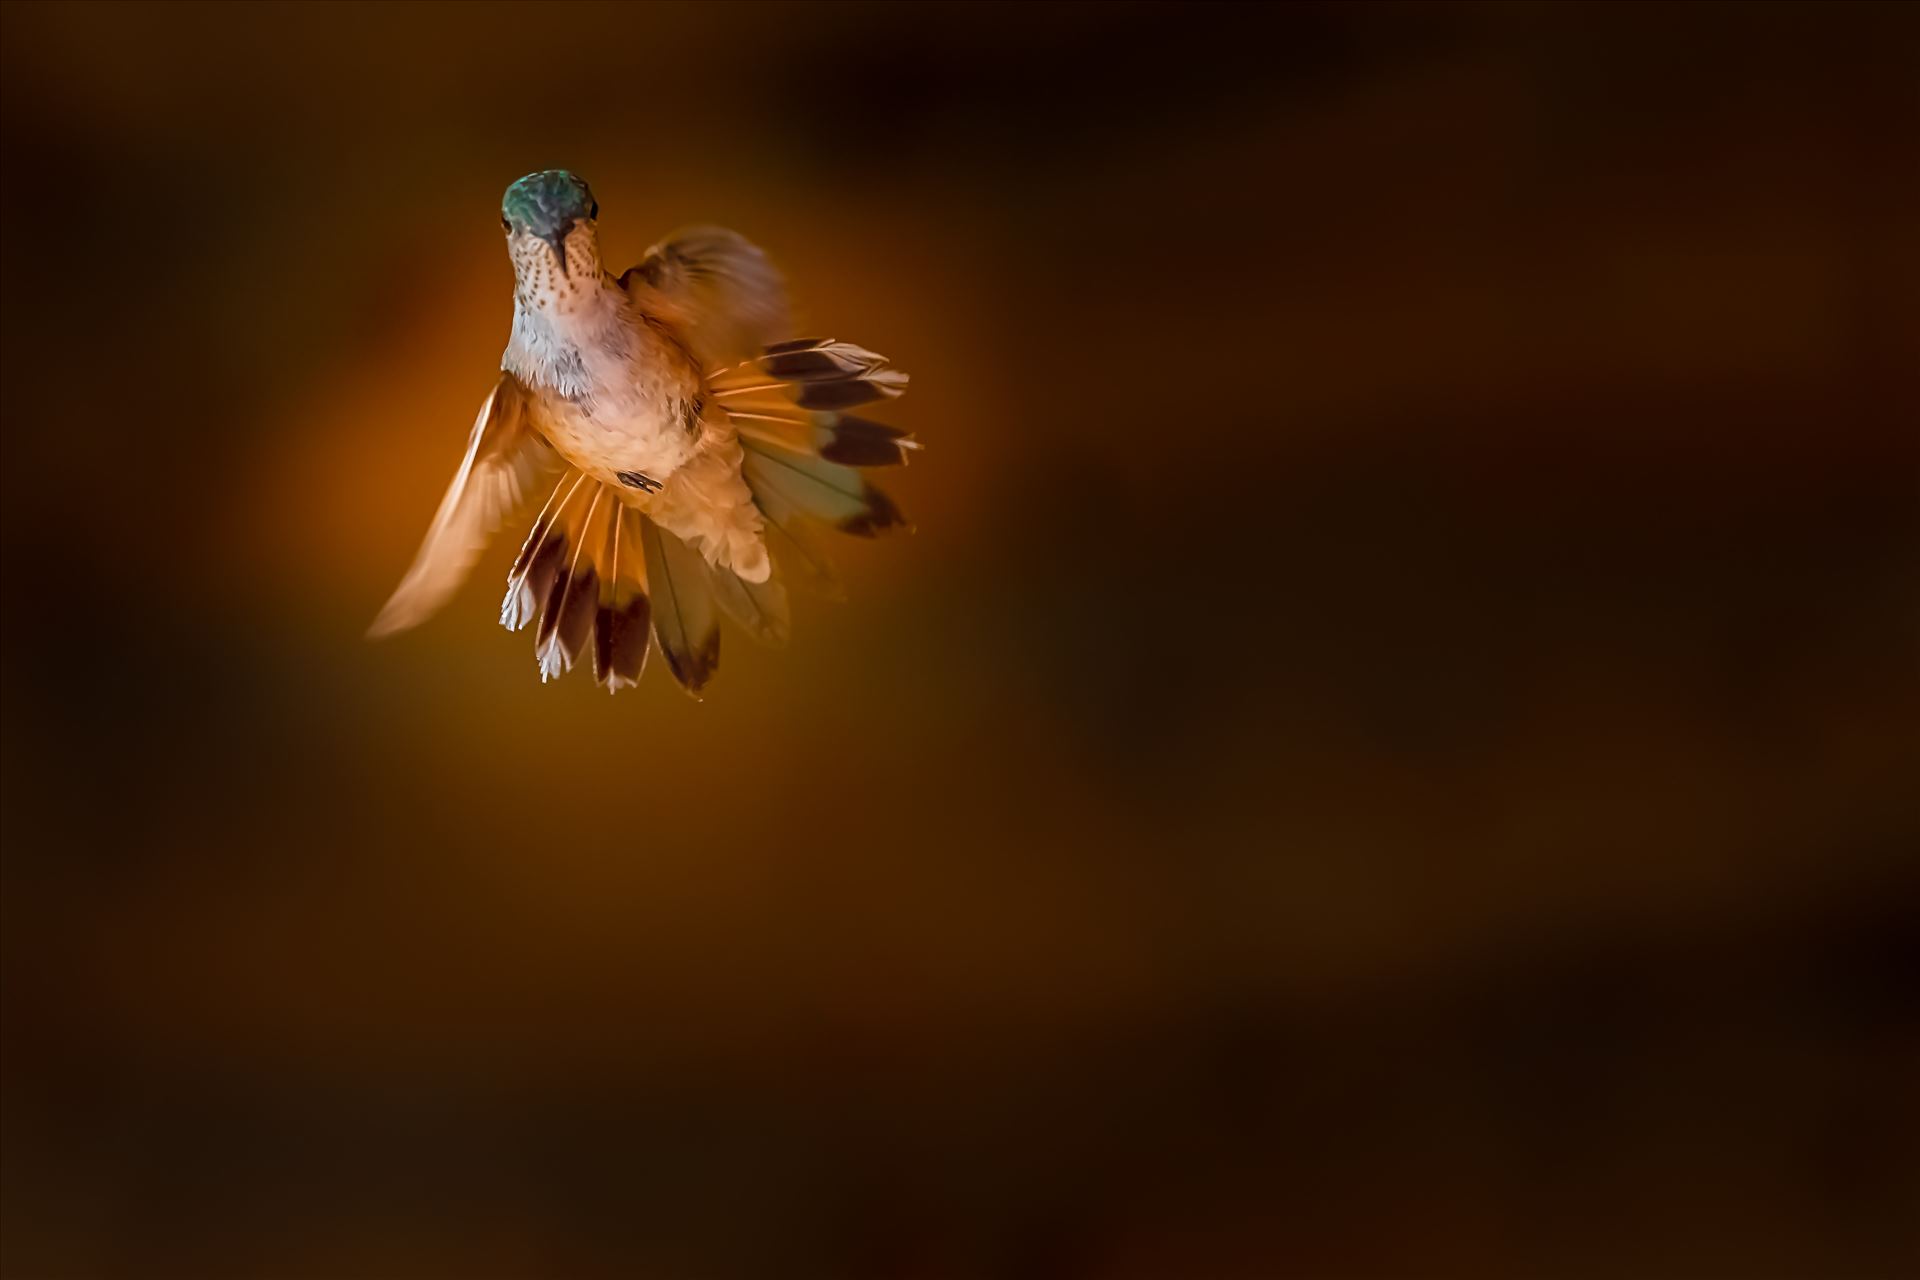 hummingbird in flight sf.jpg - Hummingbird in flight Cloudcroft, New Mexico by Terry Kelly Photography